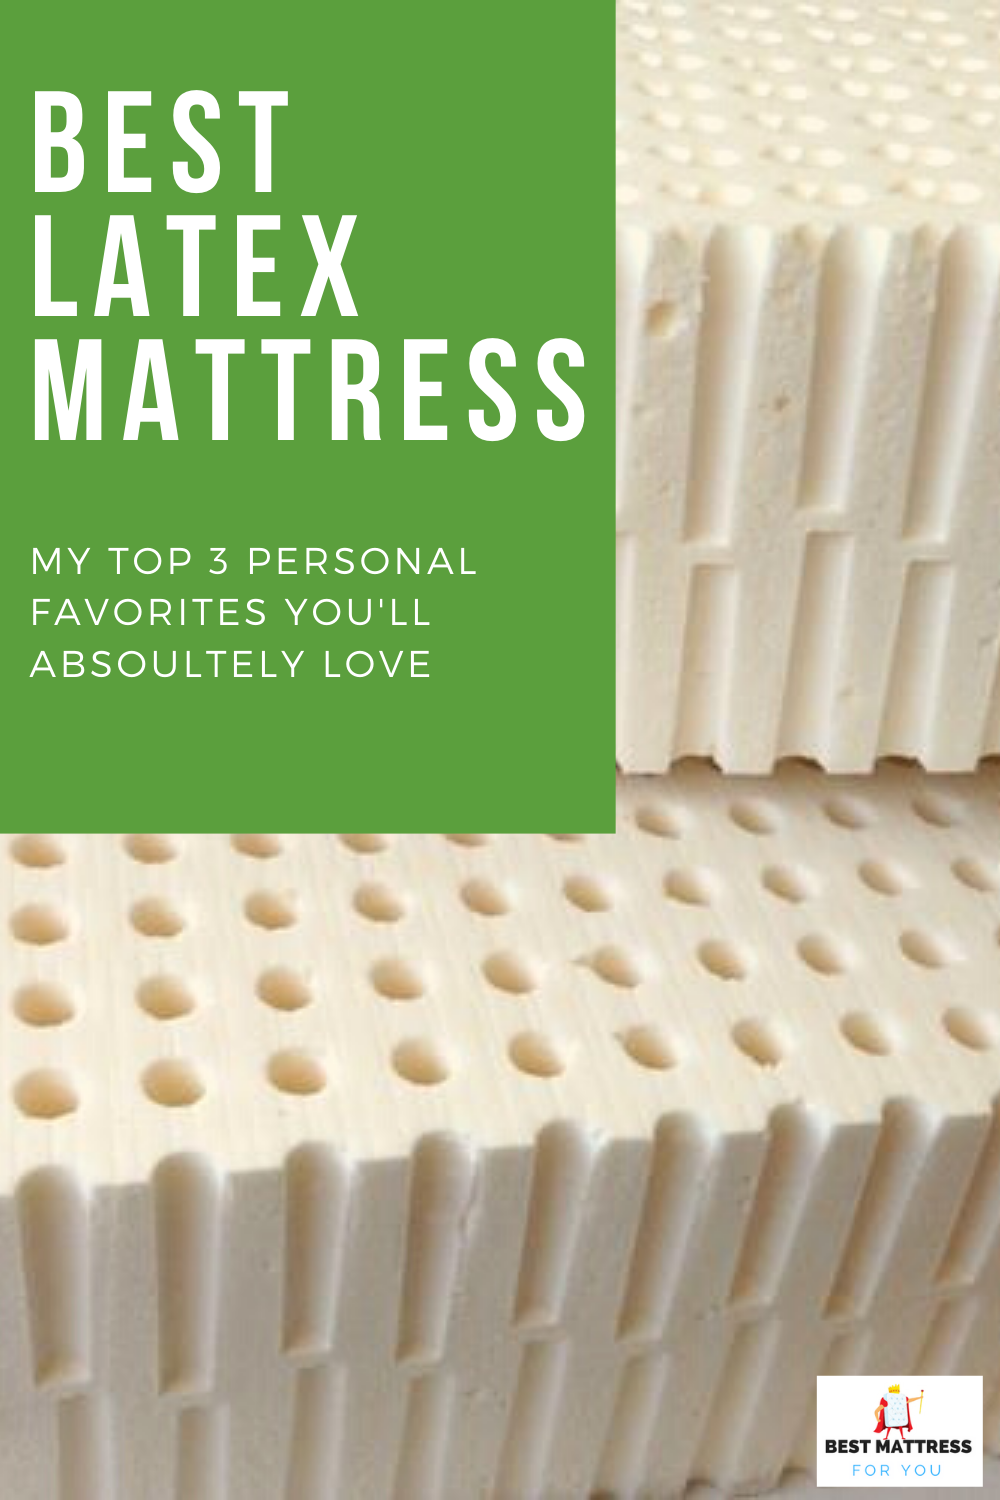 best latex mattress - cover image